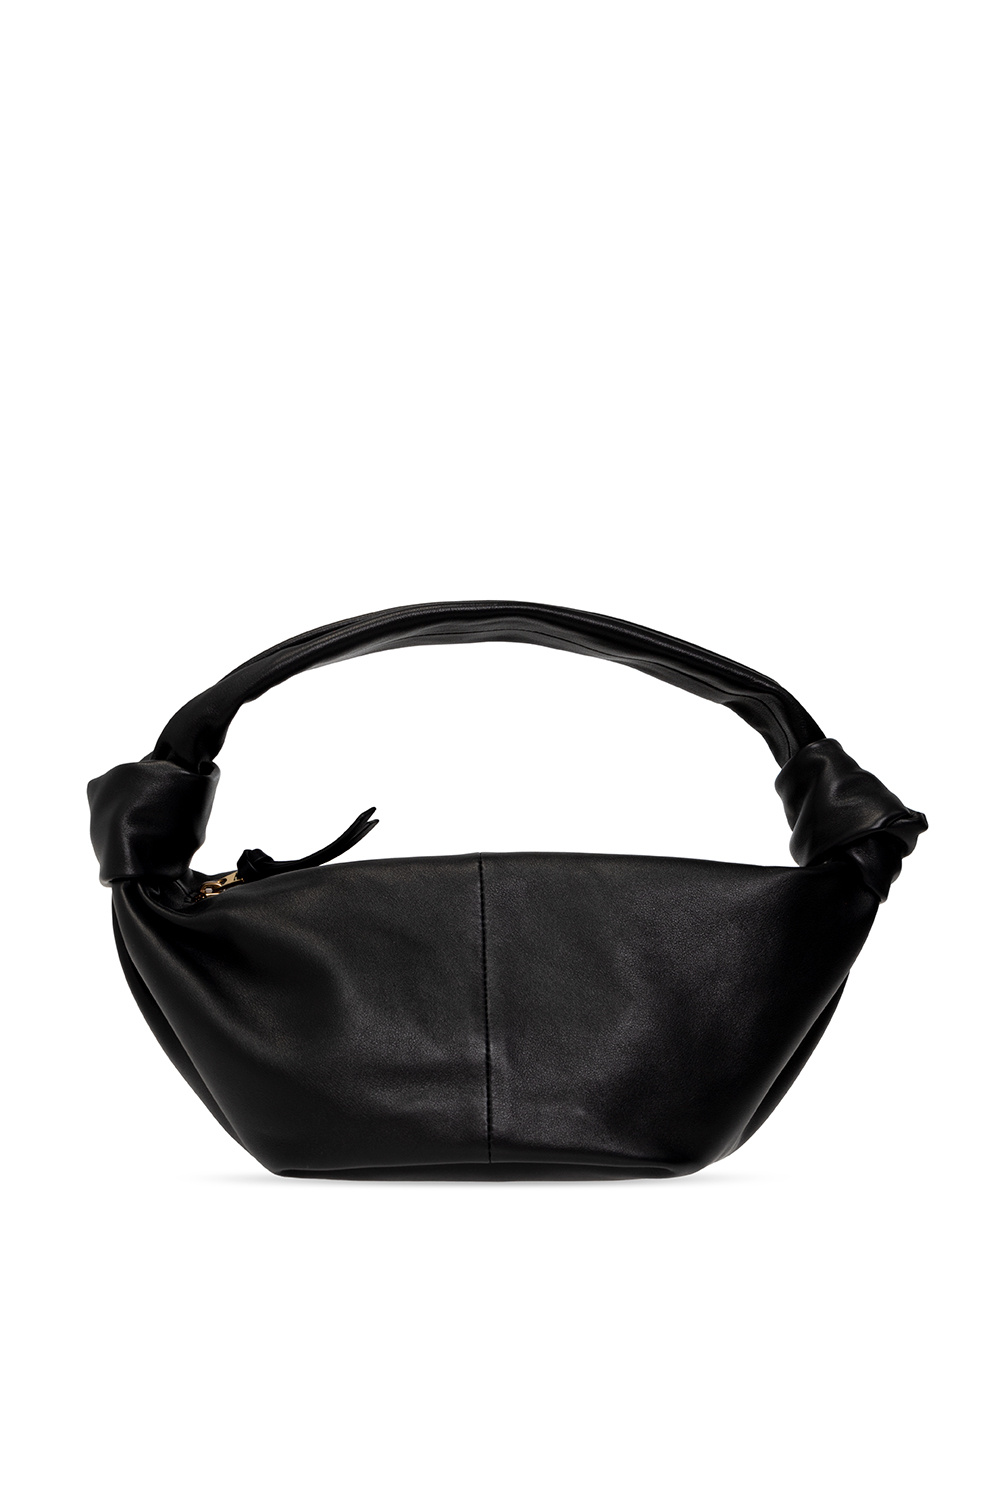 Bottega Veneta Leather Knot Bag